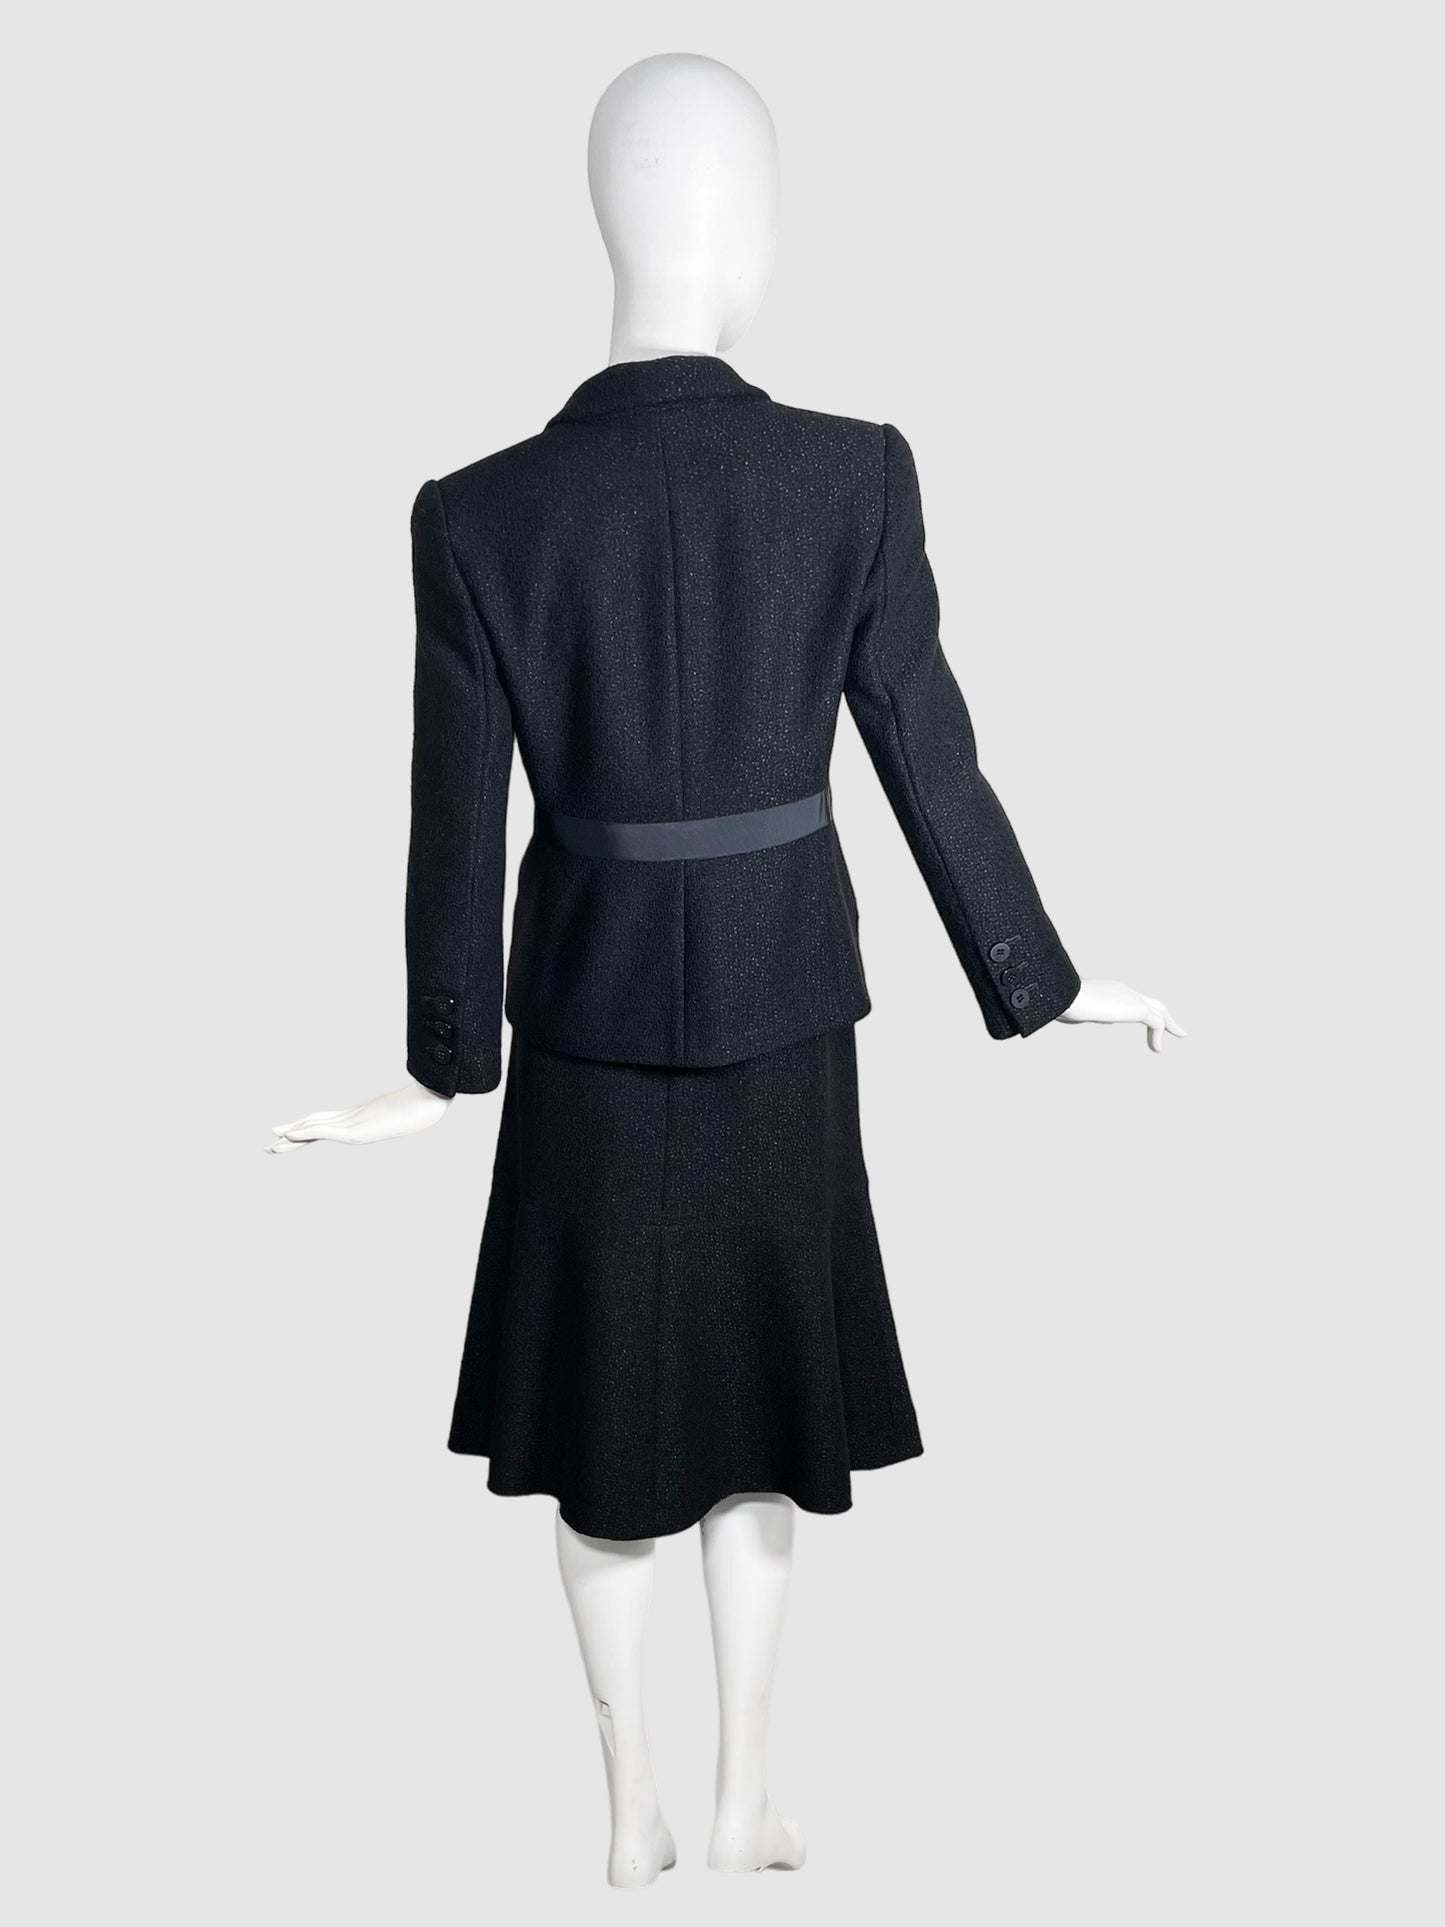 Vintage Chanel Black Tweed 2-piece set - Size 38